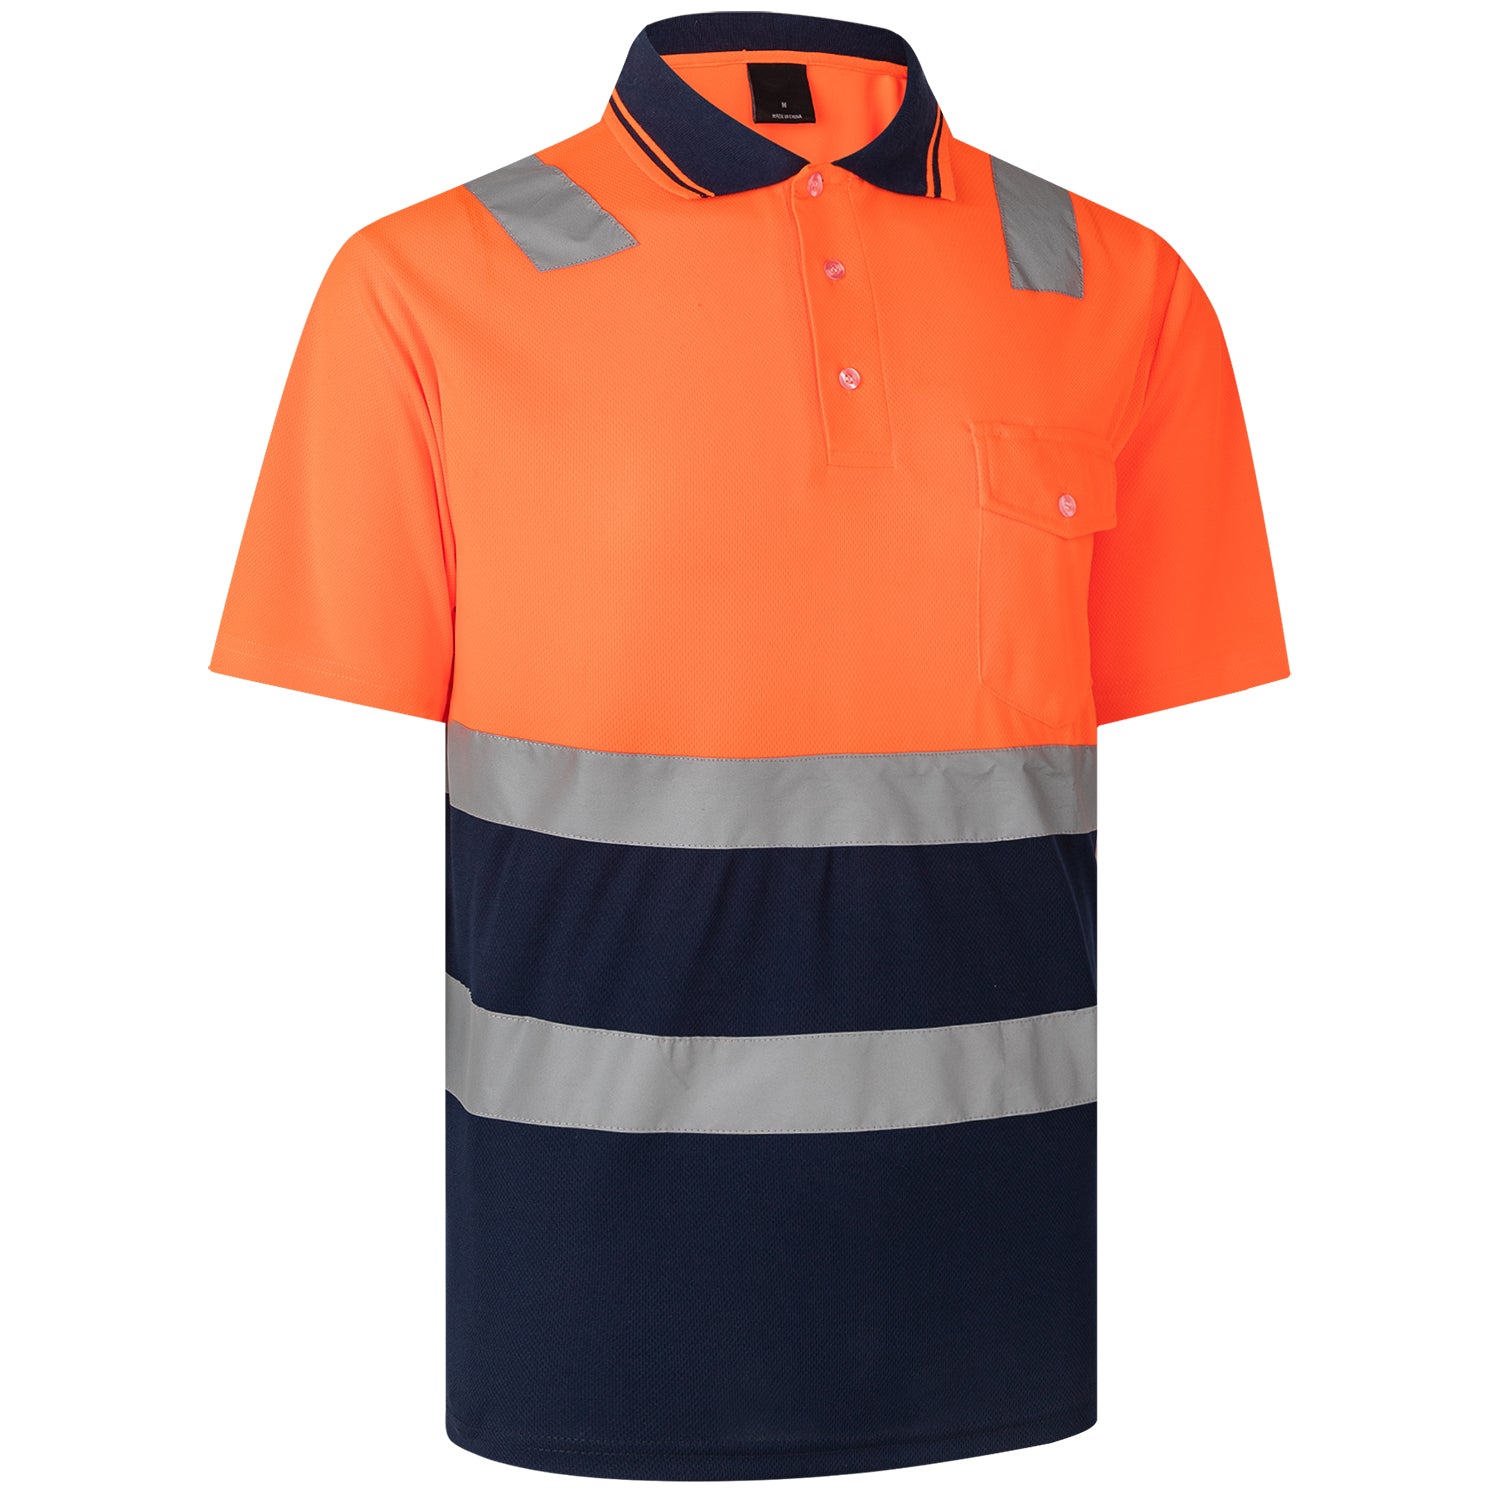 HI VIS Short Sleeve Workwear Shirt w Reflective Tape Cool Dry Safety Polo 2 Tone, Fluoro Orange / Navy, XS